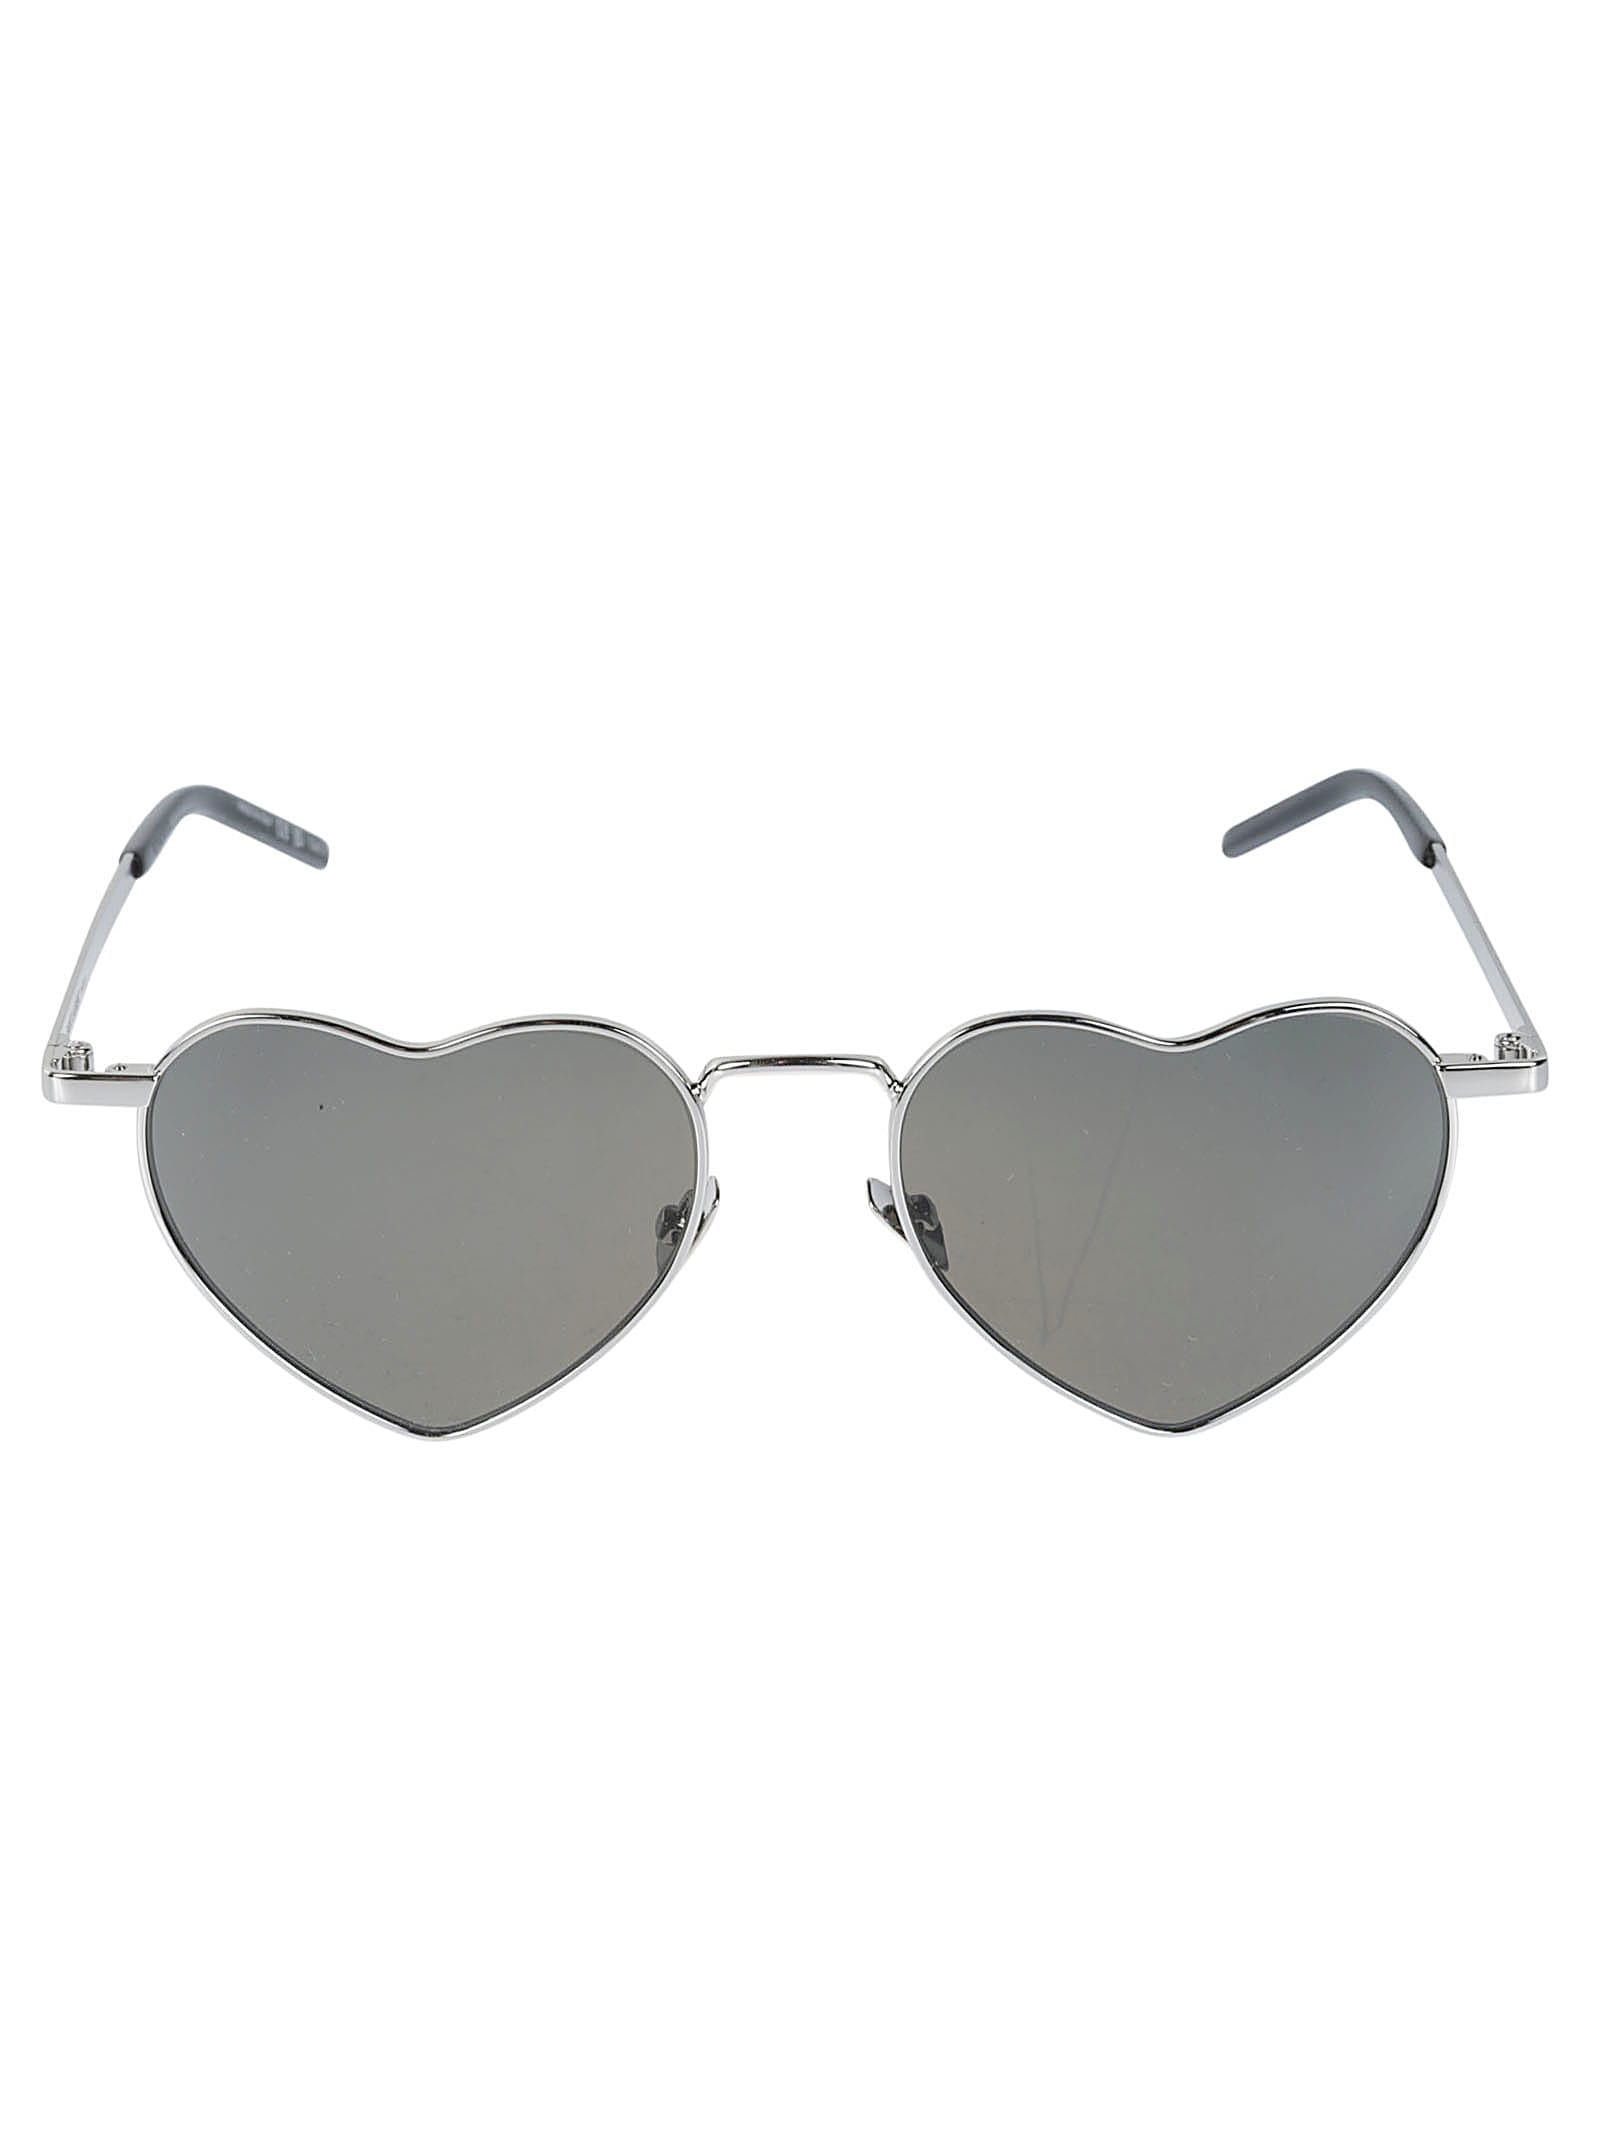 Saint Laurent Eyewear Heart Frame Sunglasses